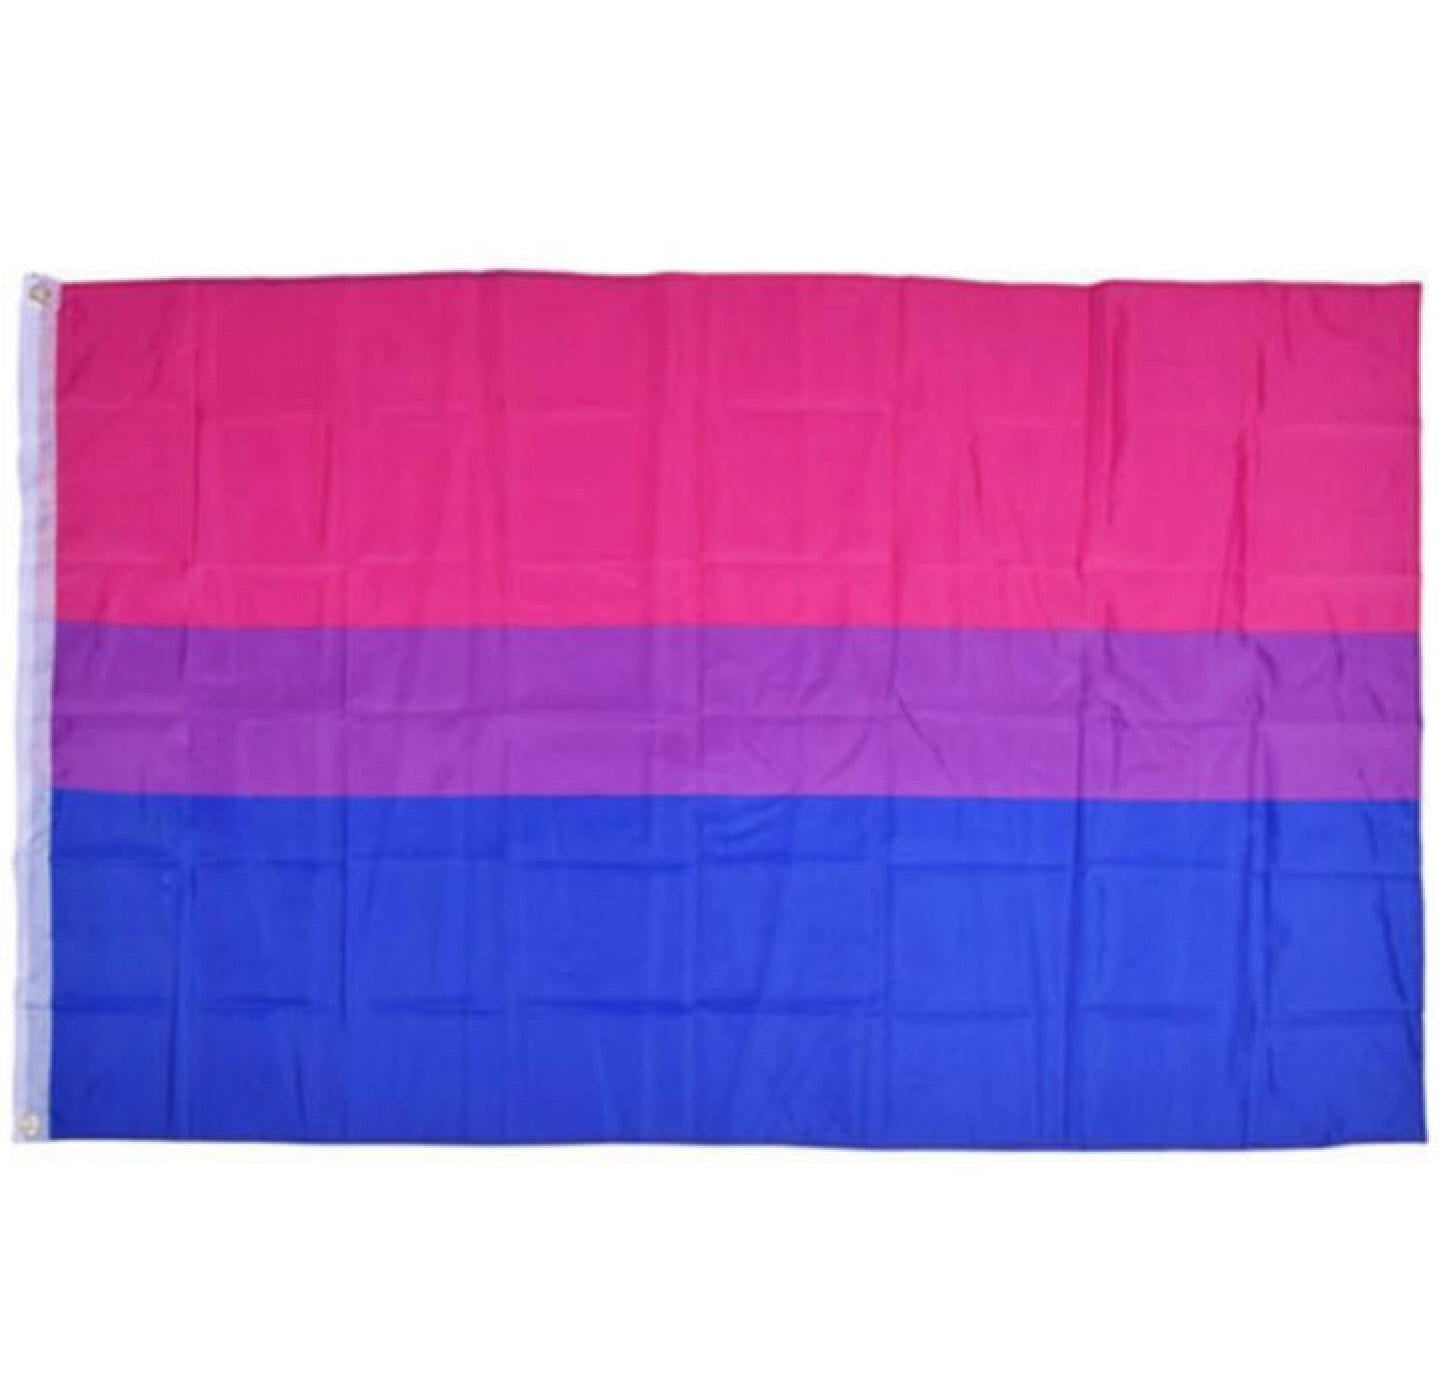 Bisexuell Bi Pride Flagge 150 x 90cm